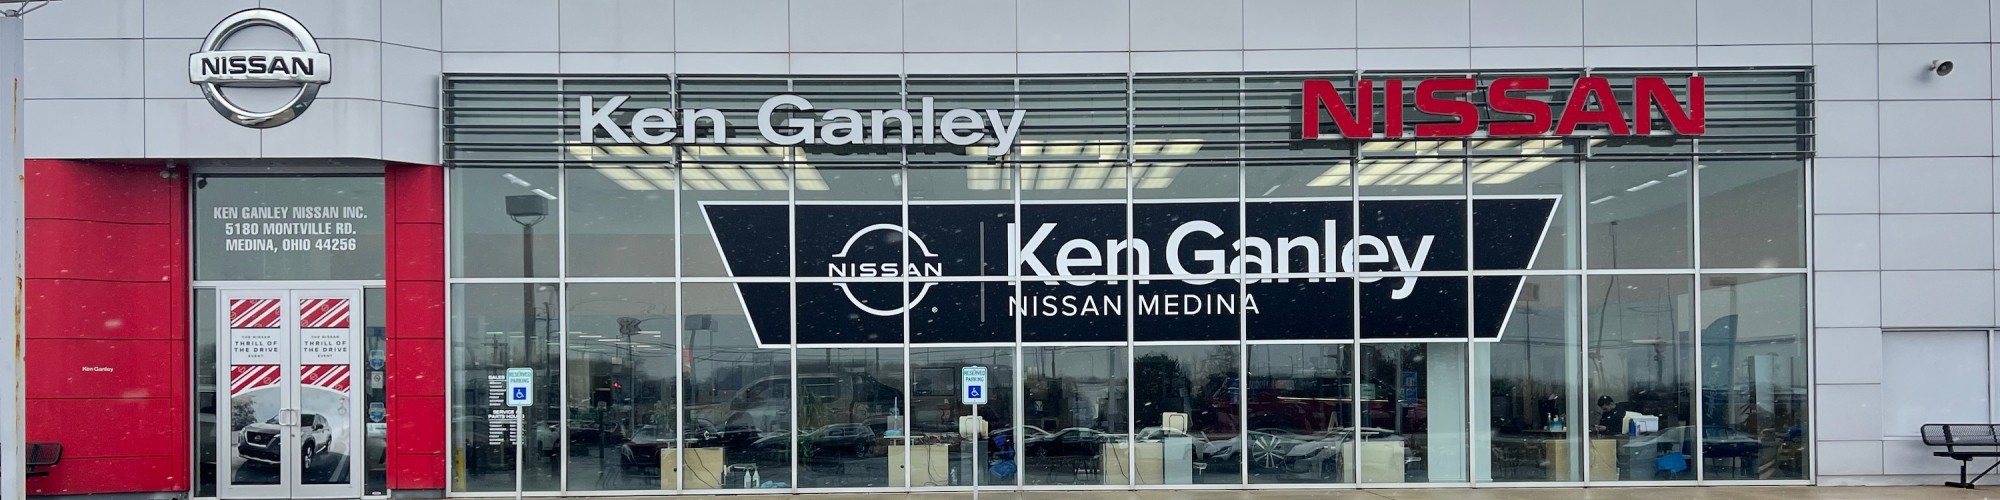 Ken Ganley Nissan Medina cover image